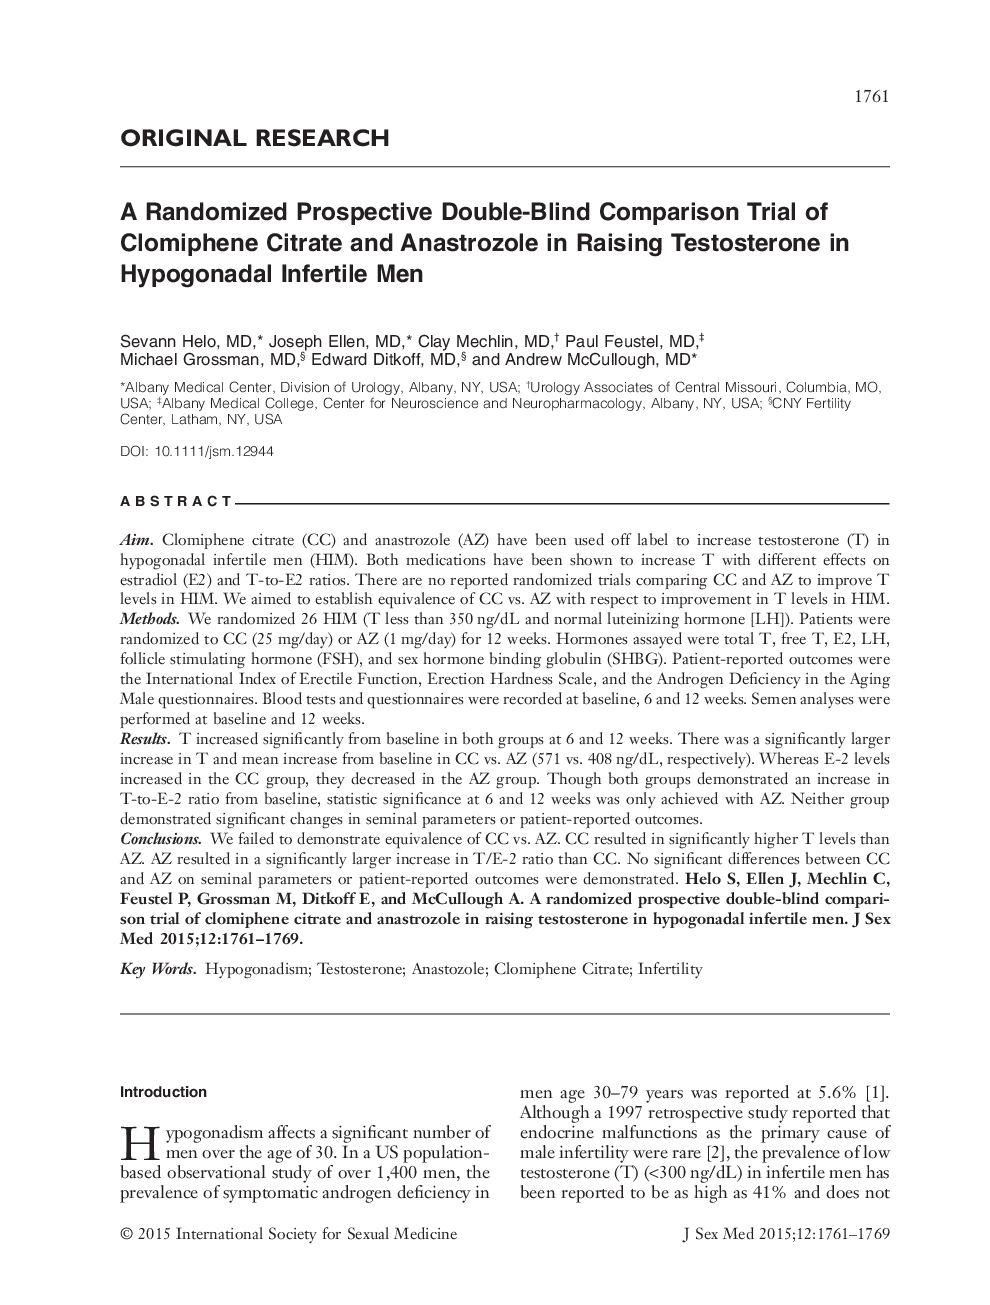 A Randomized Prospective Double‐Blind Comparison Trial of Clomiphene Citrate and Anastrozole in Raising Testosterone in Hypogonadal Infertile Men 